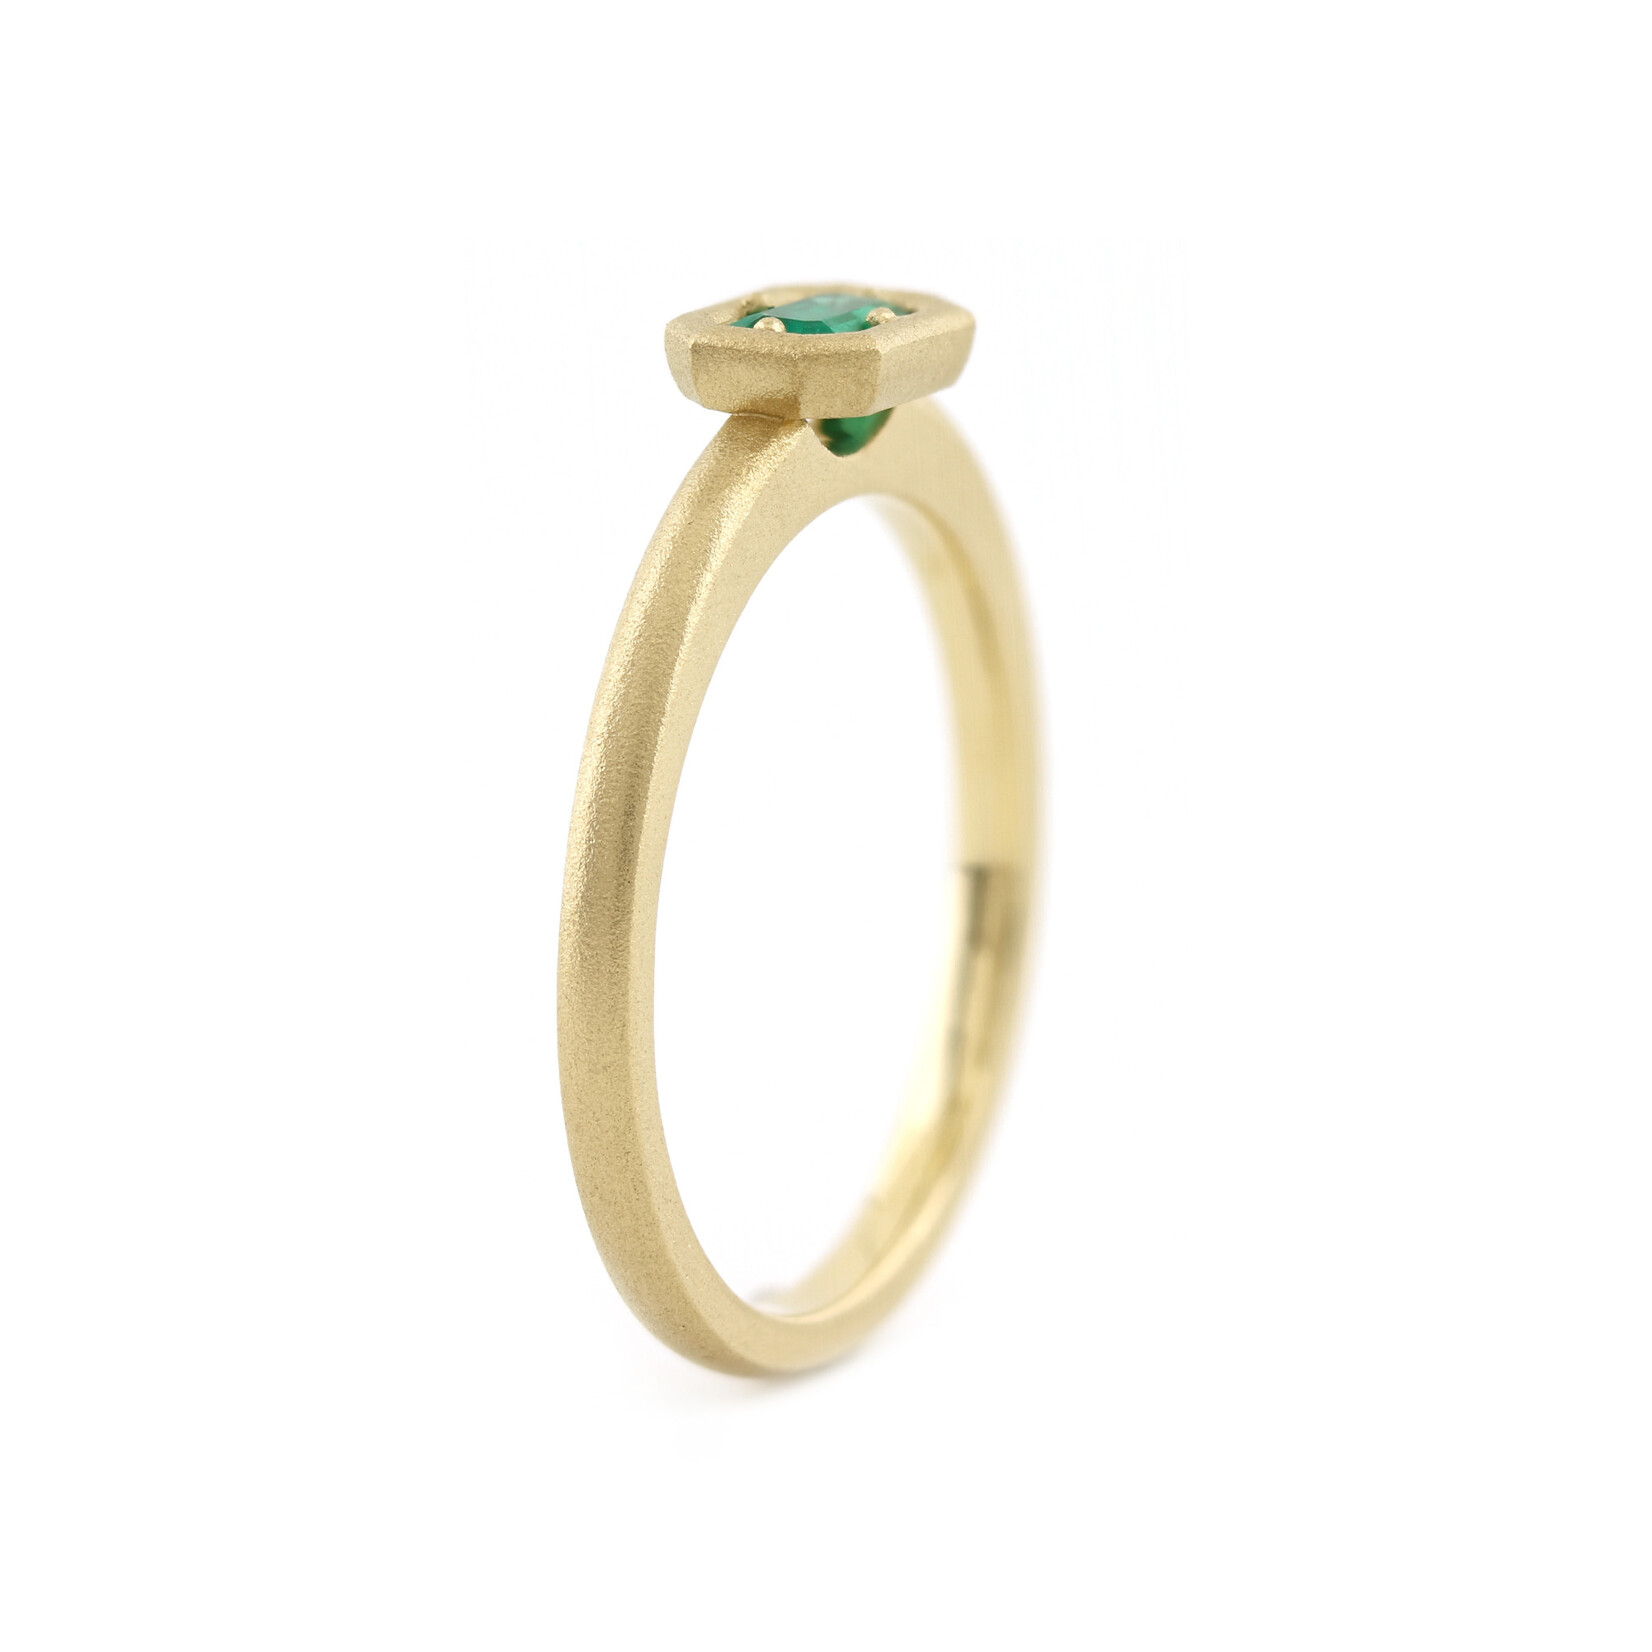 Baxter Moerman Anika Ring with 0.25ct Emerald